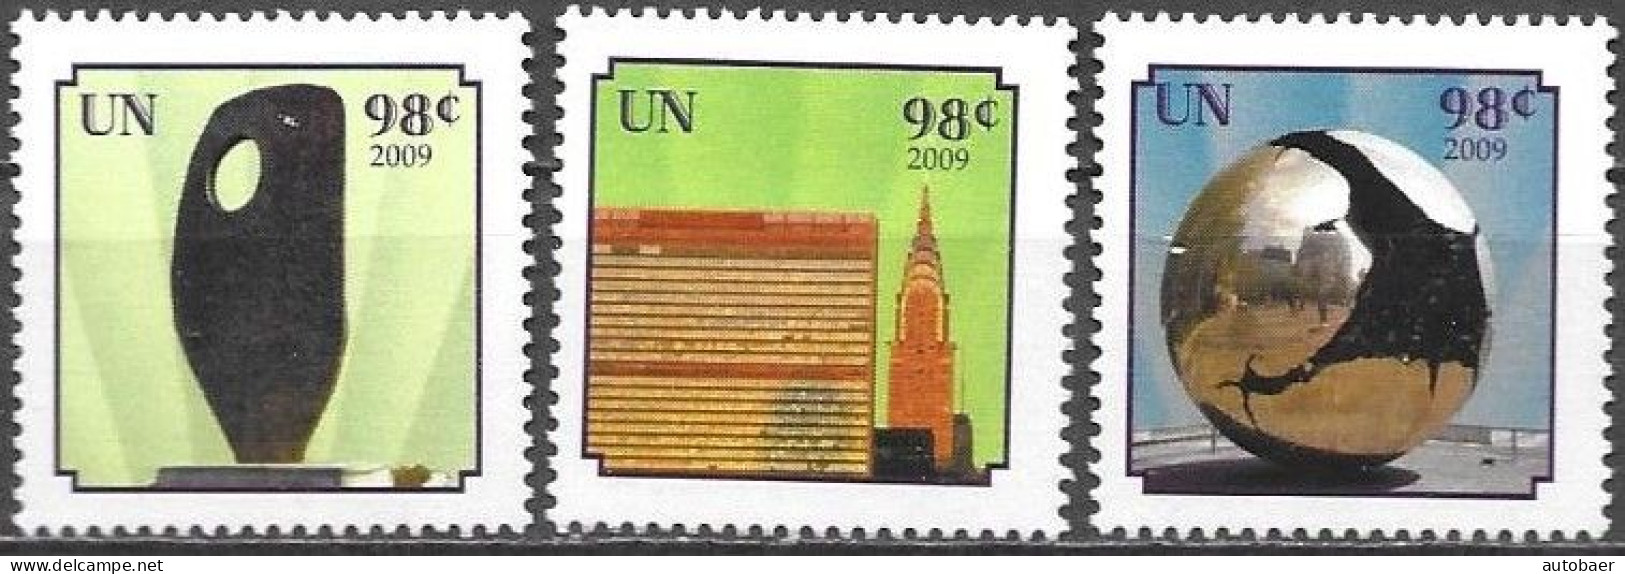 United Nations UNO UN Vereinte Nationen New York 2009 Greetings 3v. Mi.No.1155,57-58 MNH ** Neuf - Unused Stamps